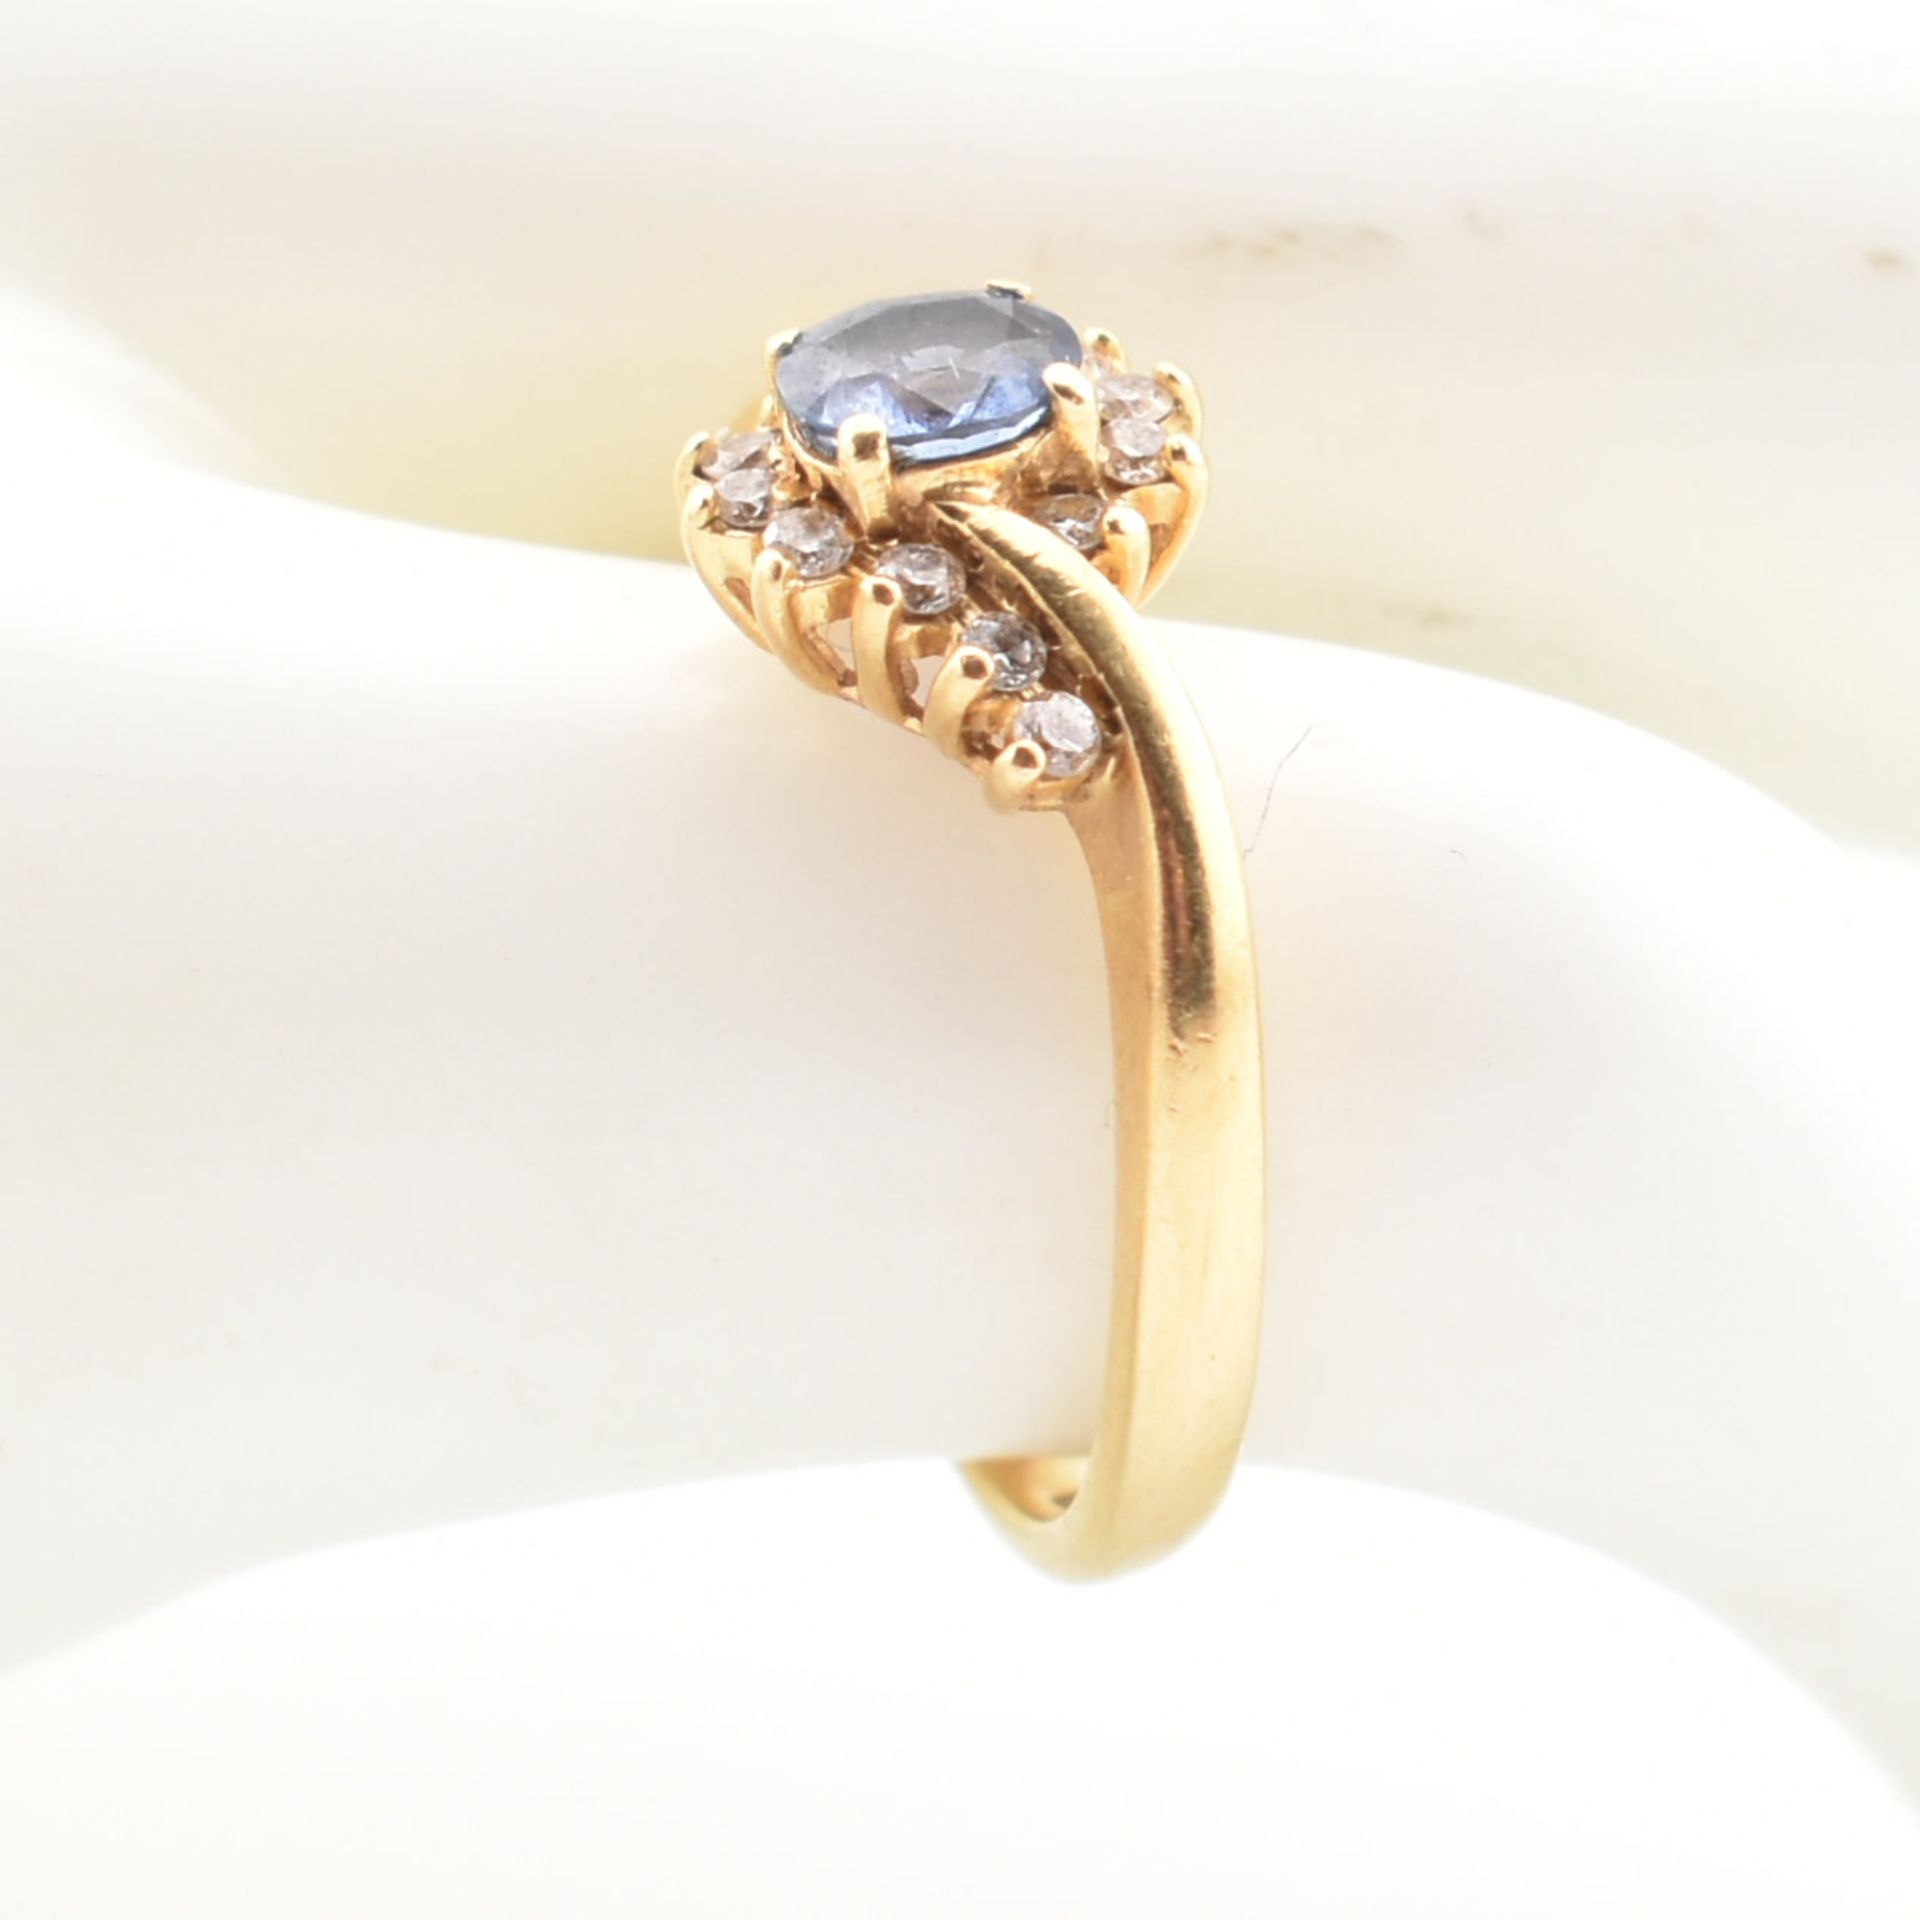 HALLMARKED 18CT GOLD CEYLON SAPPHIRE & DIAMOND RING - Image 8 of 8